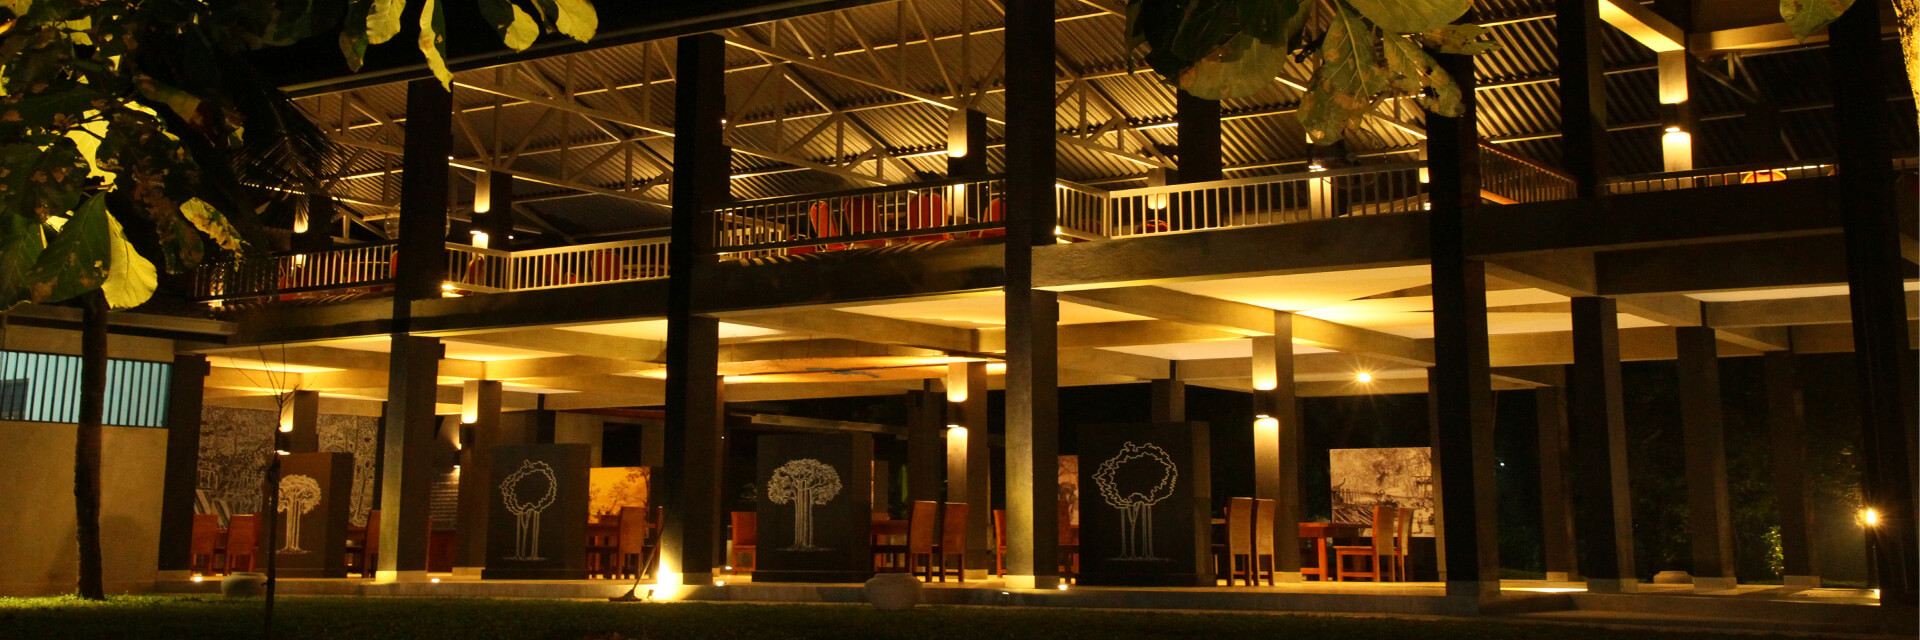 udawalawe hotels sri lanka - Swiming Pool Nili Diya Mankada Hotel Udawalawe